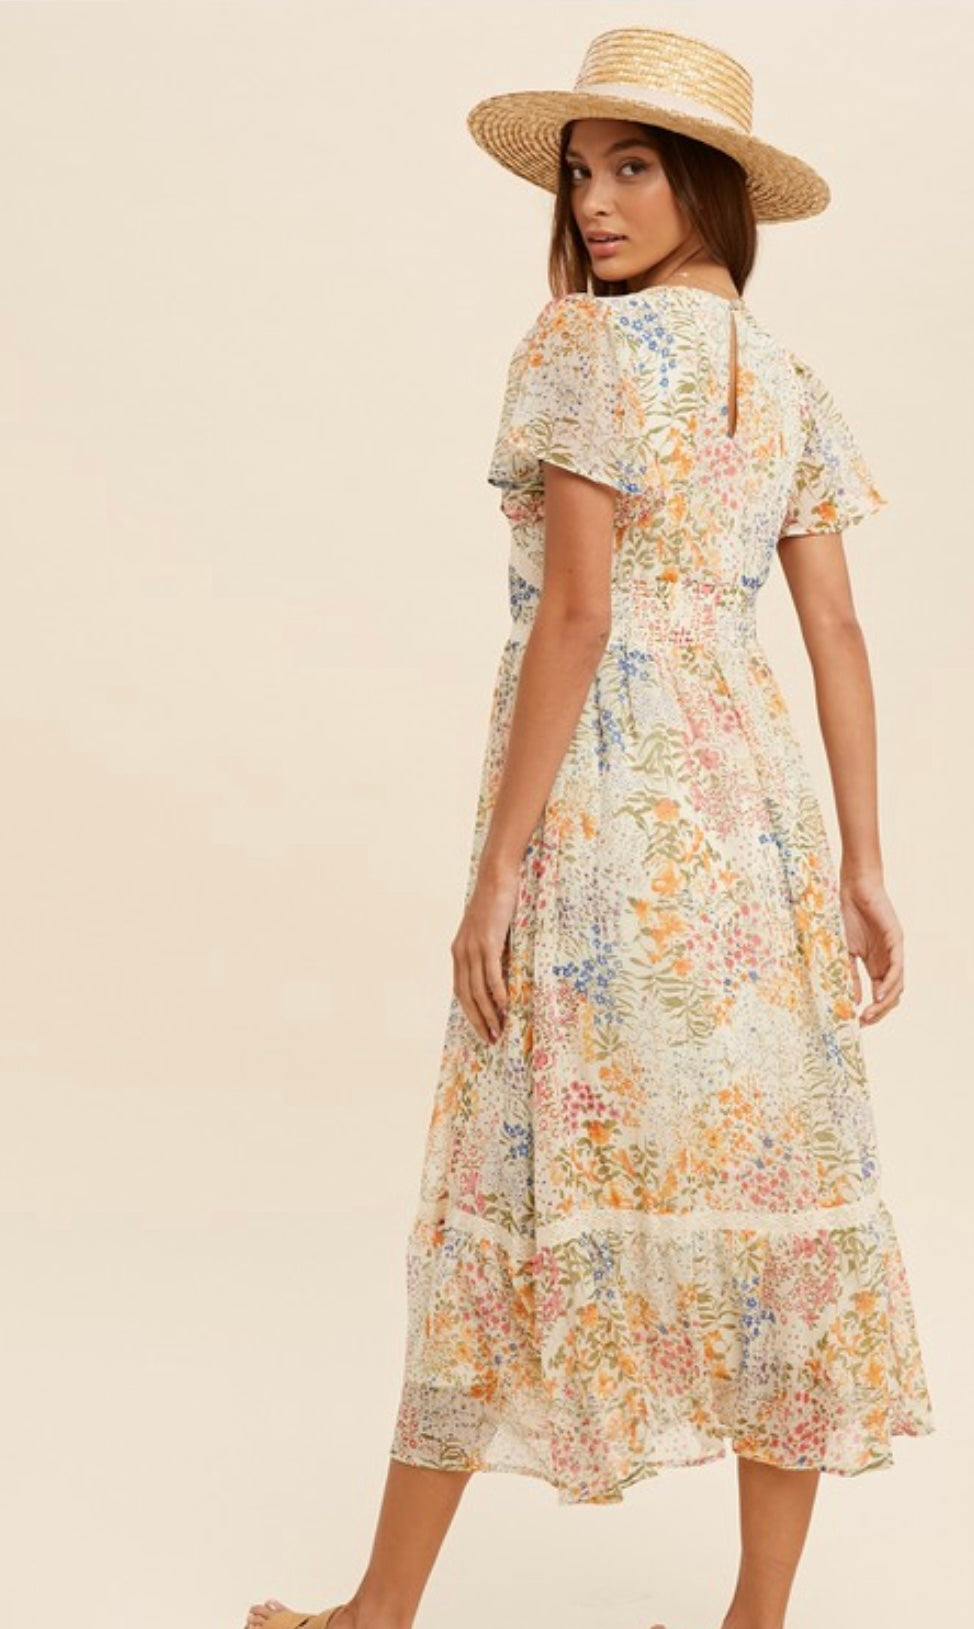 The Harriet Floral Dress